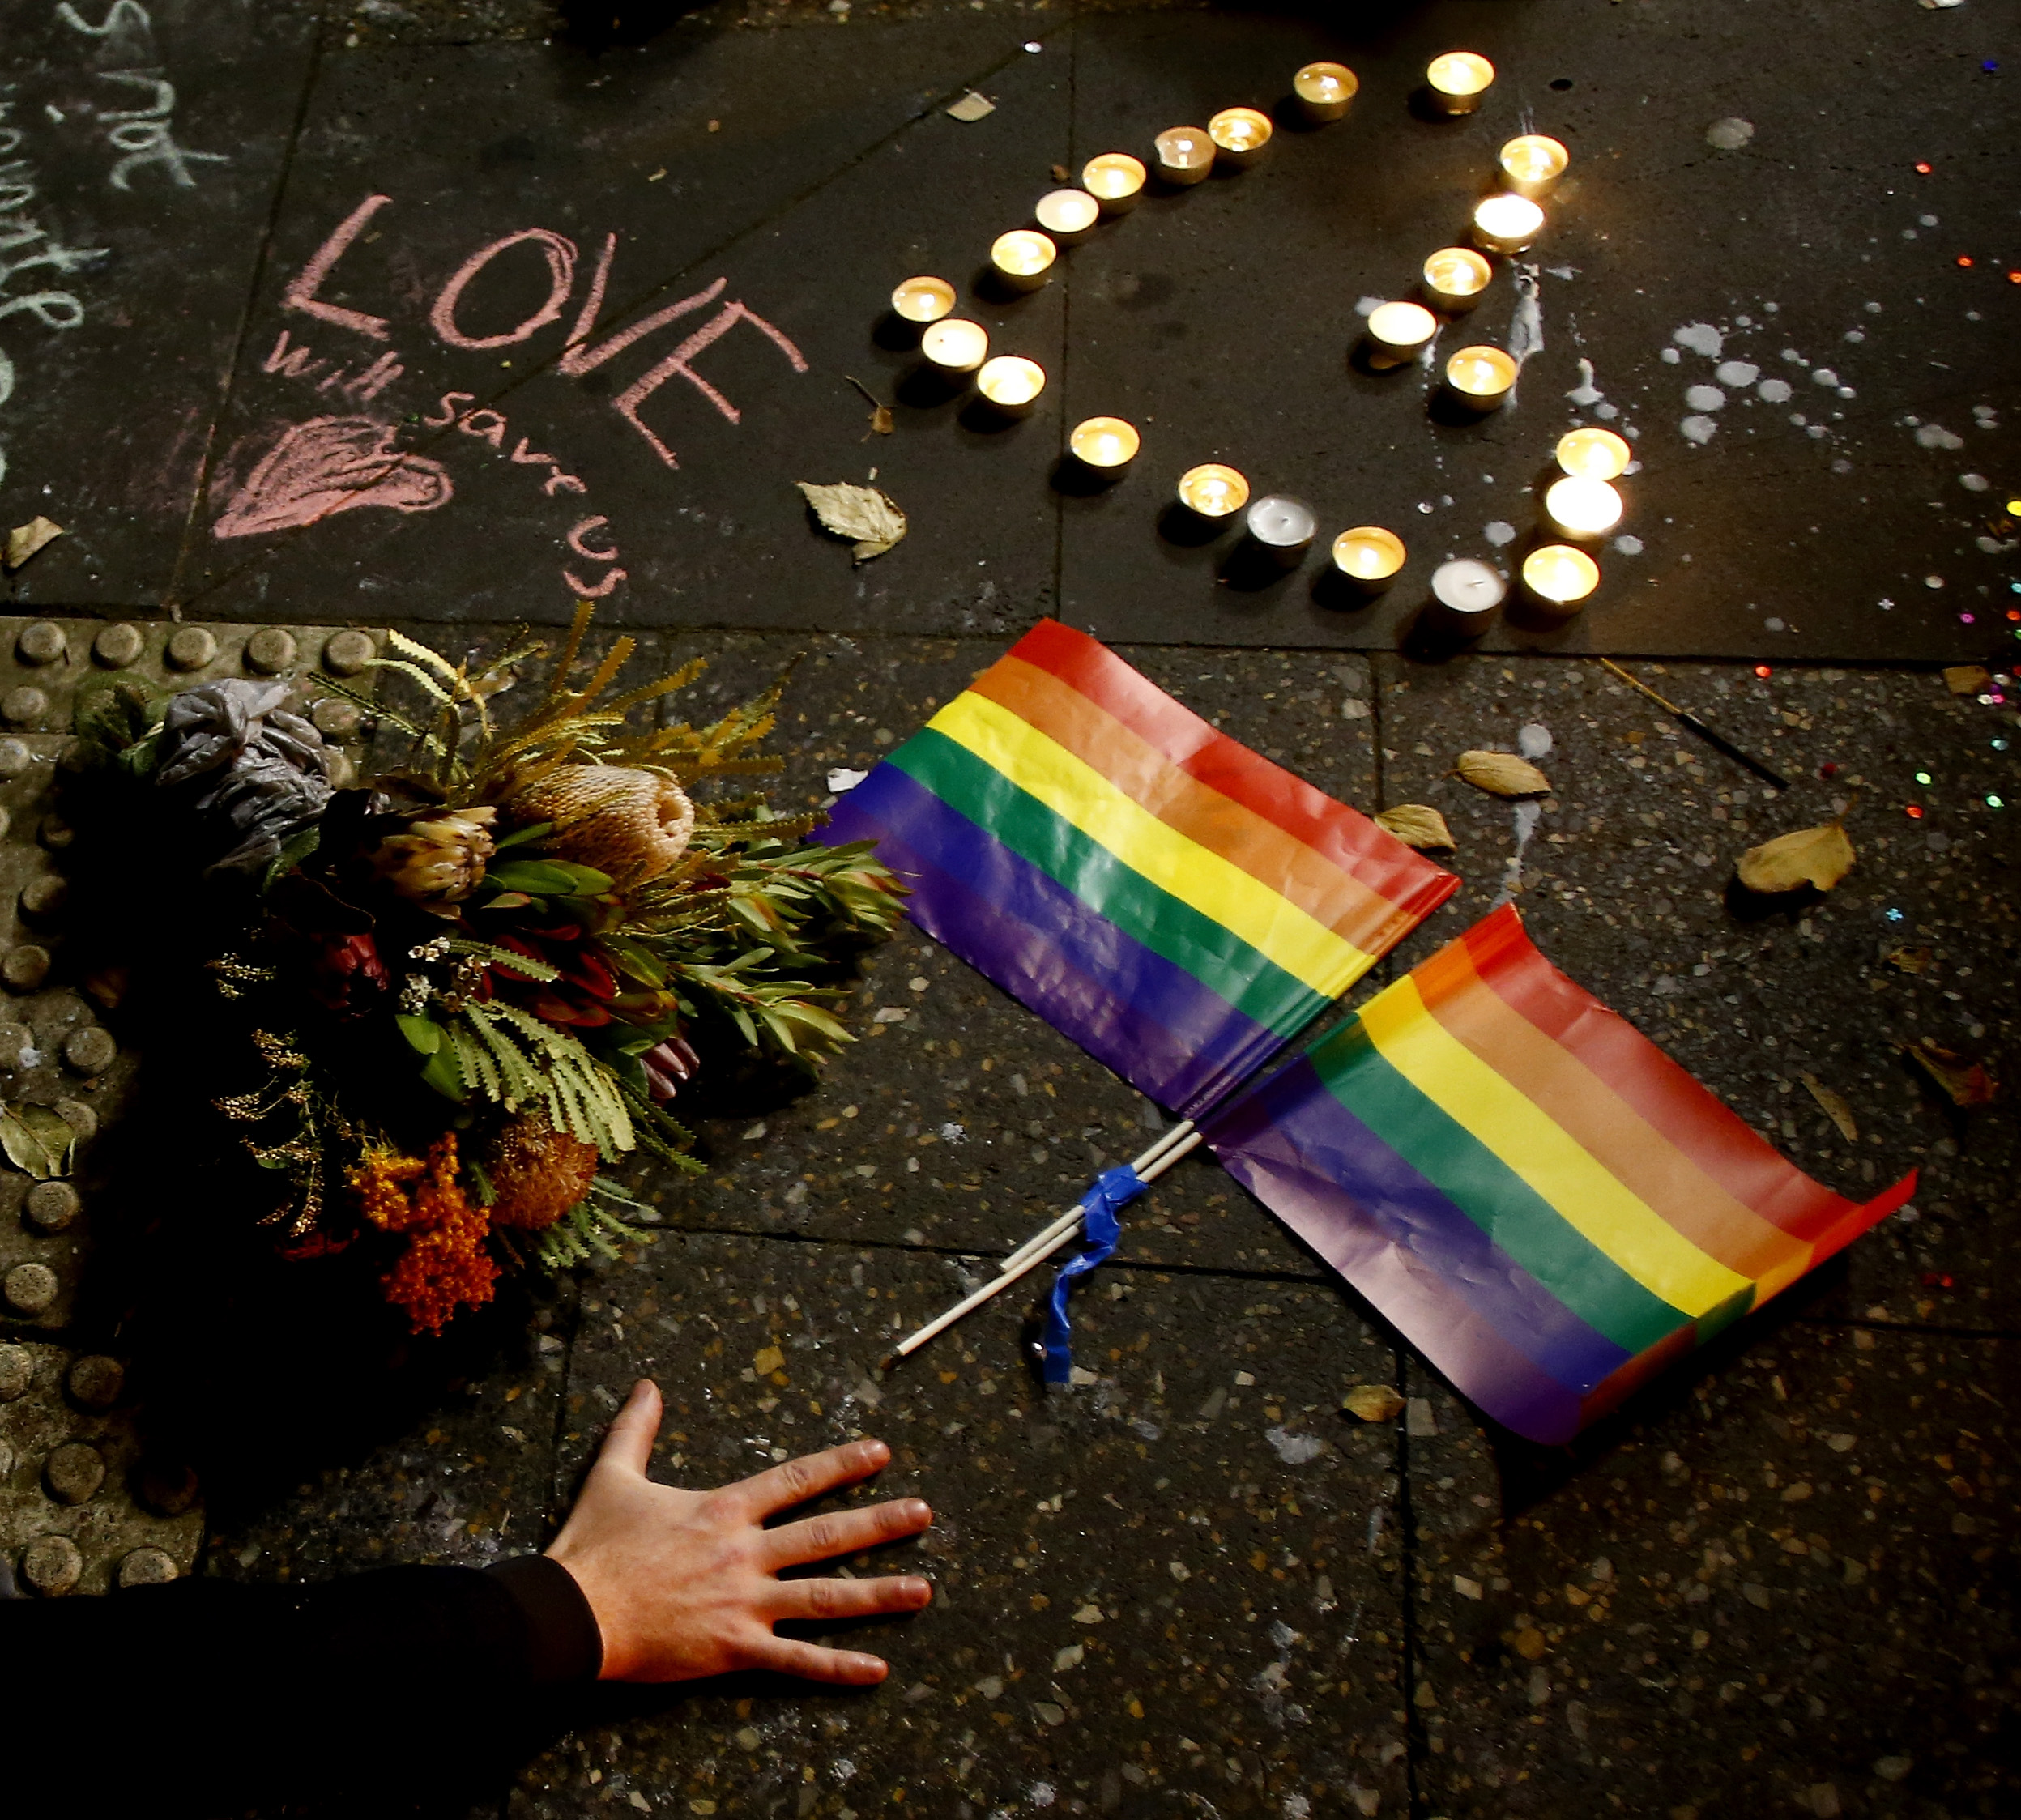 Australians Hold Candlelit Vigils For Victims Of Orlando Nightclub Shooting